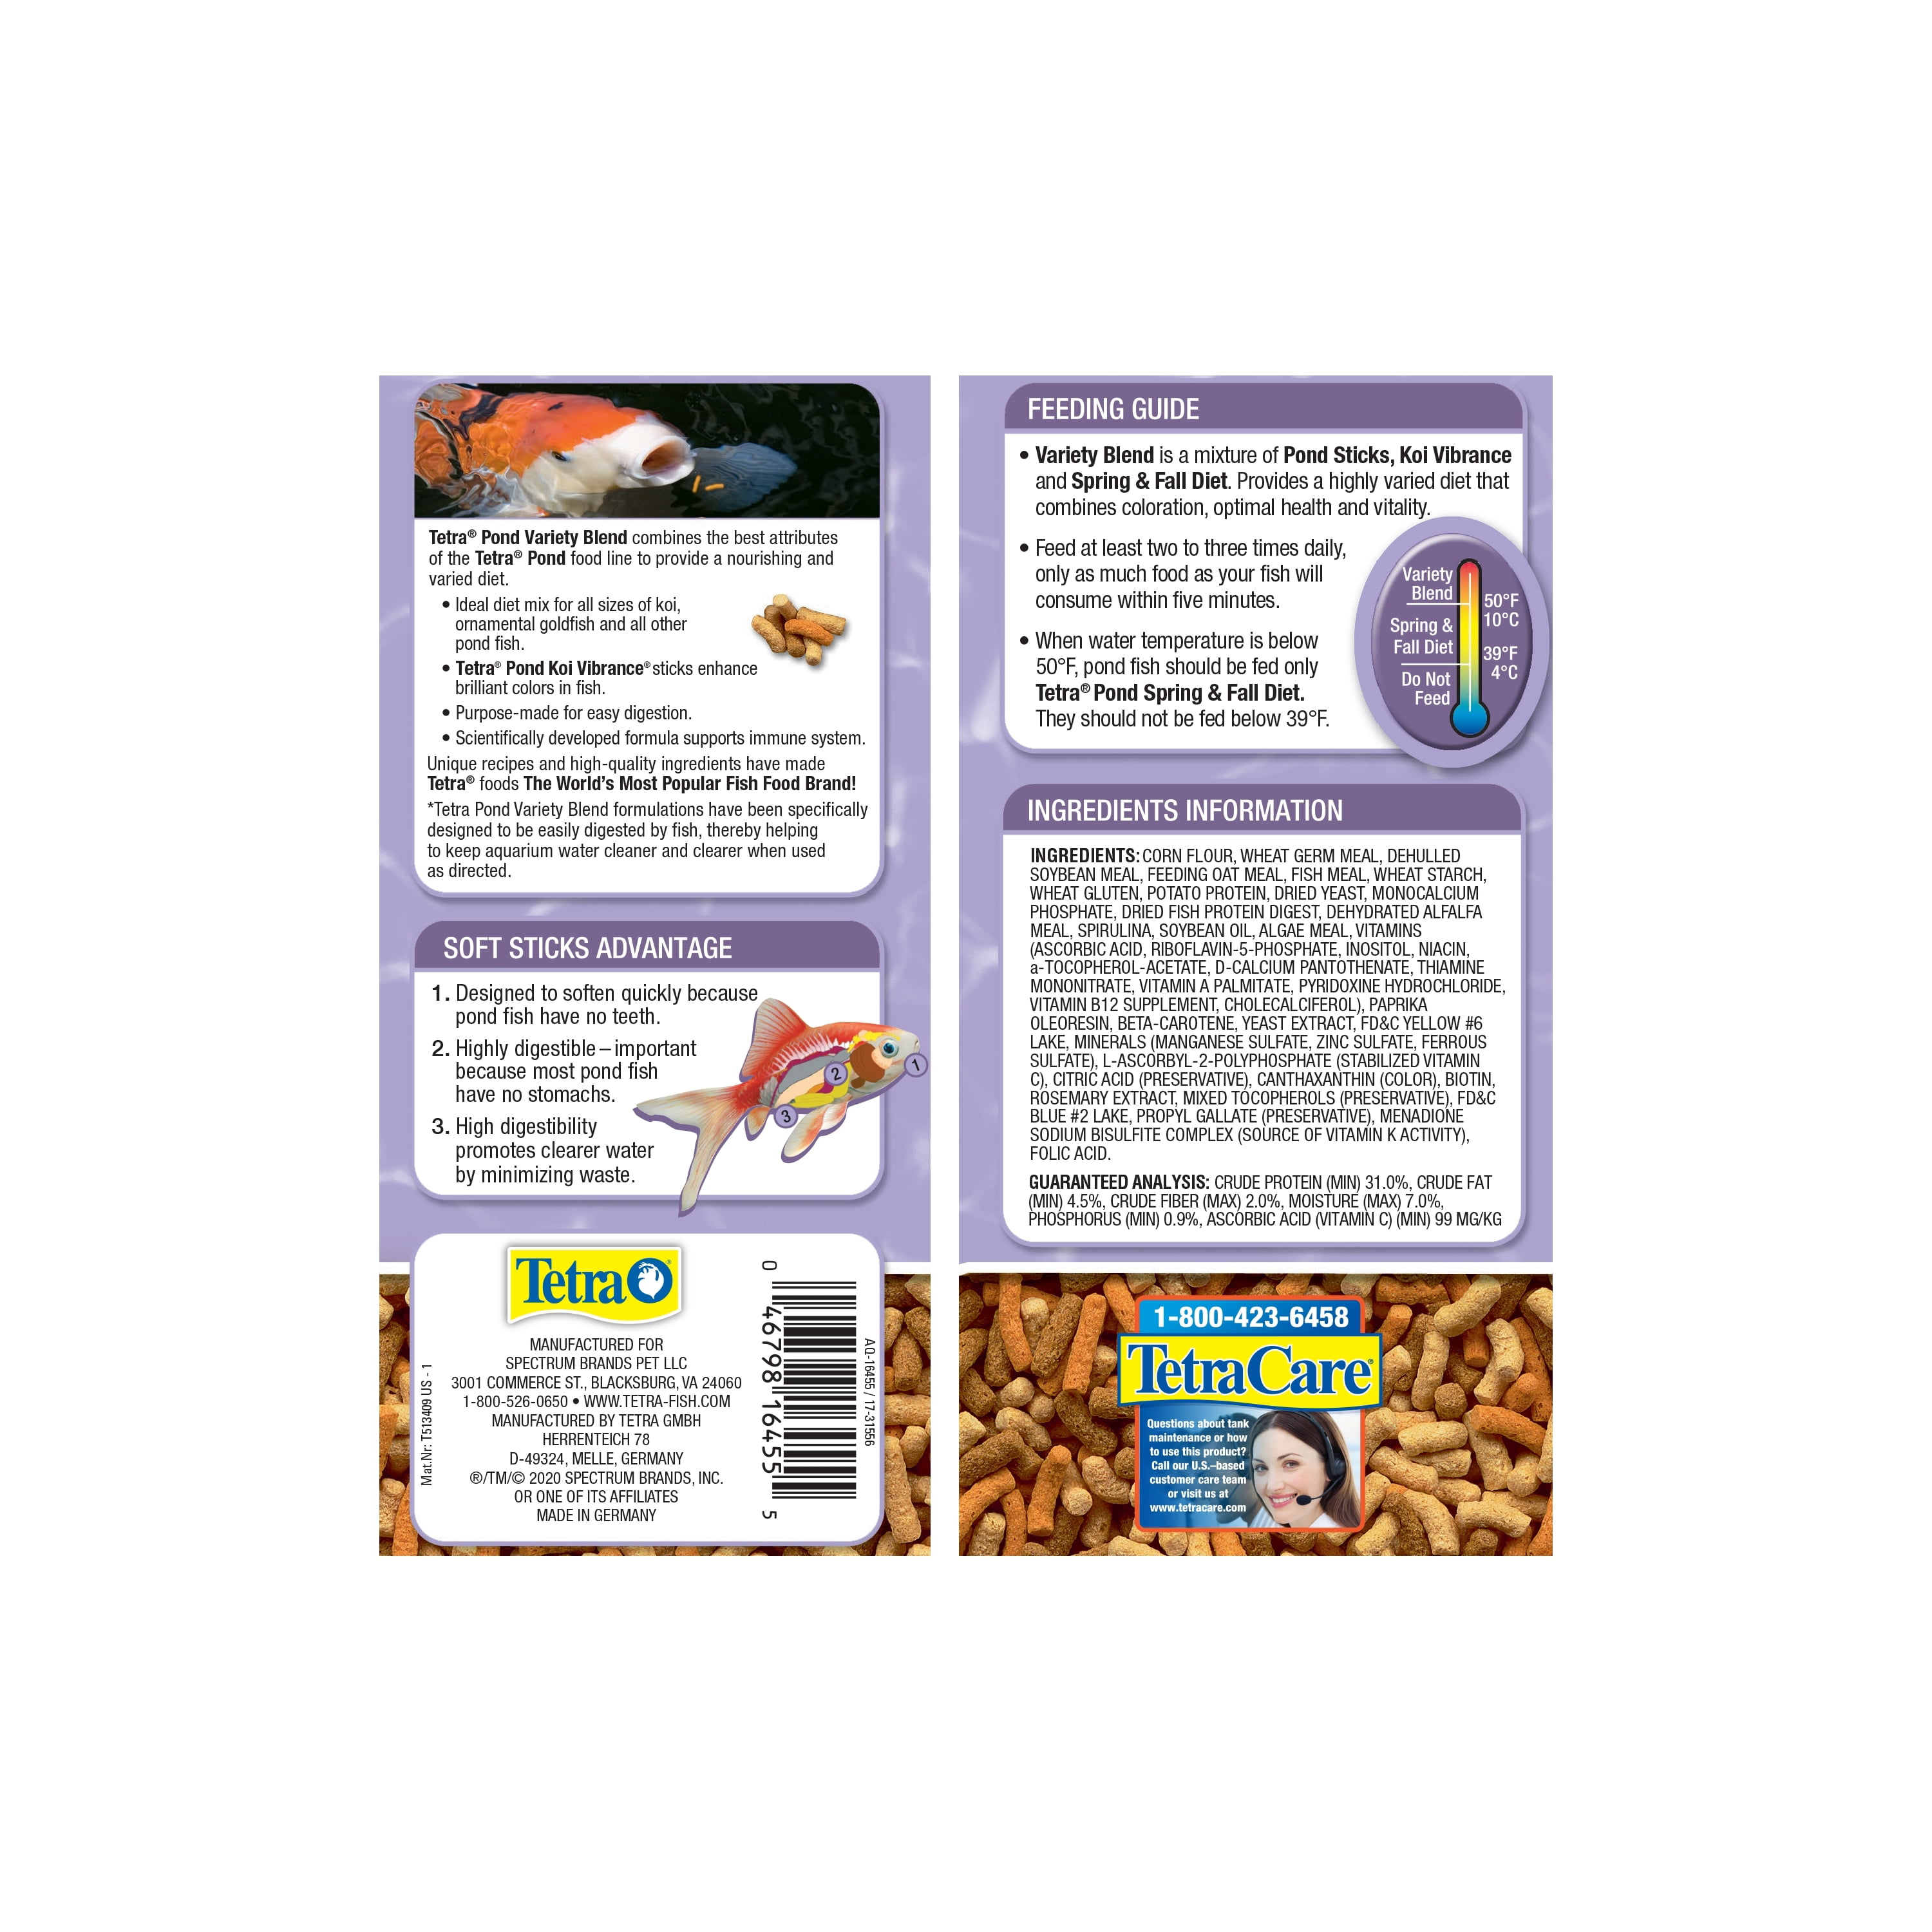 Tetra Pond Variety Blend Color & Vitality Enhancing Koi & Goldfish